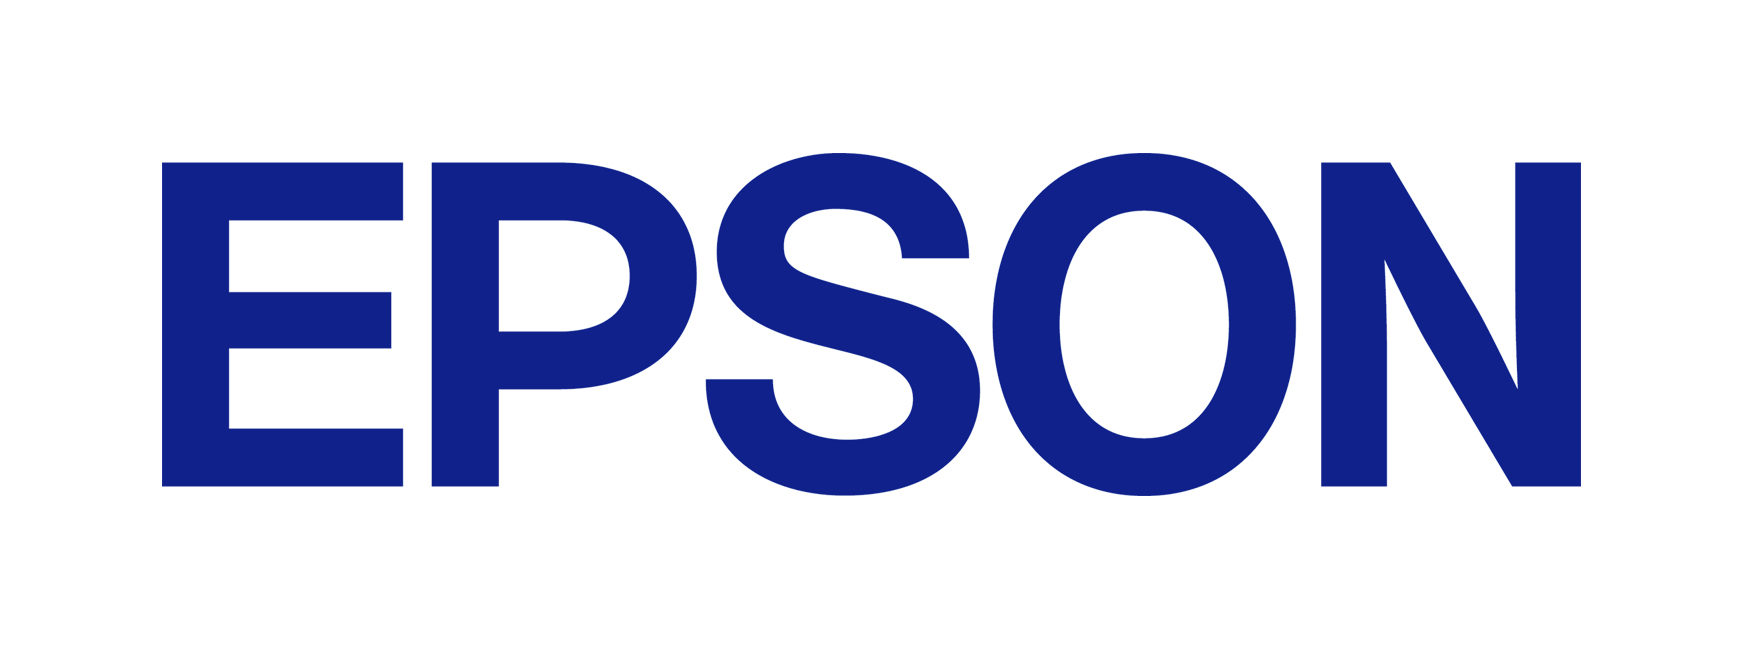 Epson-Printer-Logo1.jpg